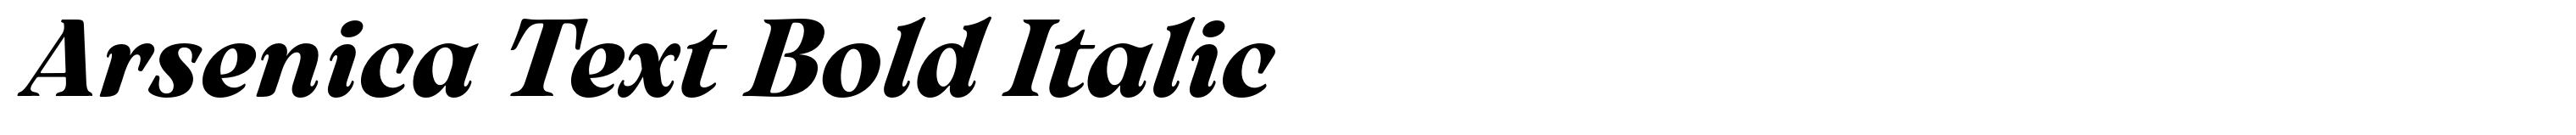 Arsenica Text Bold Italic